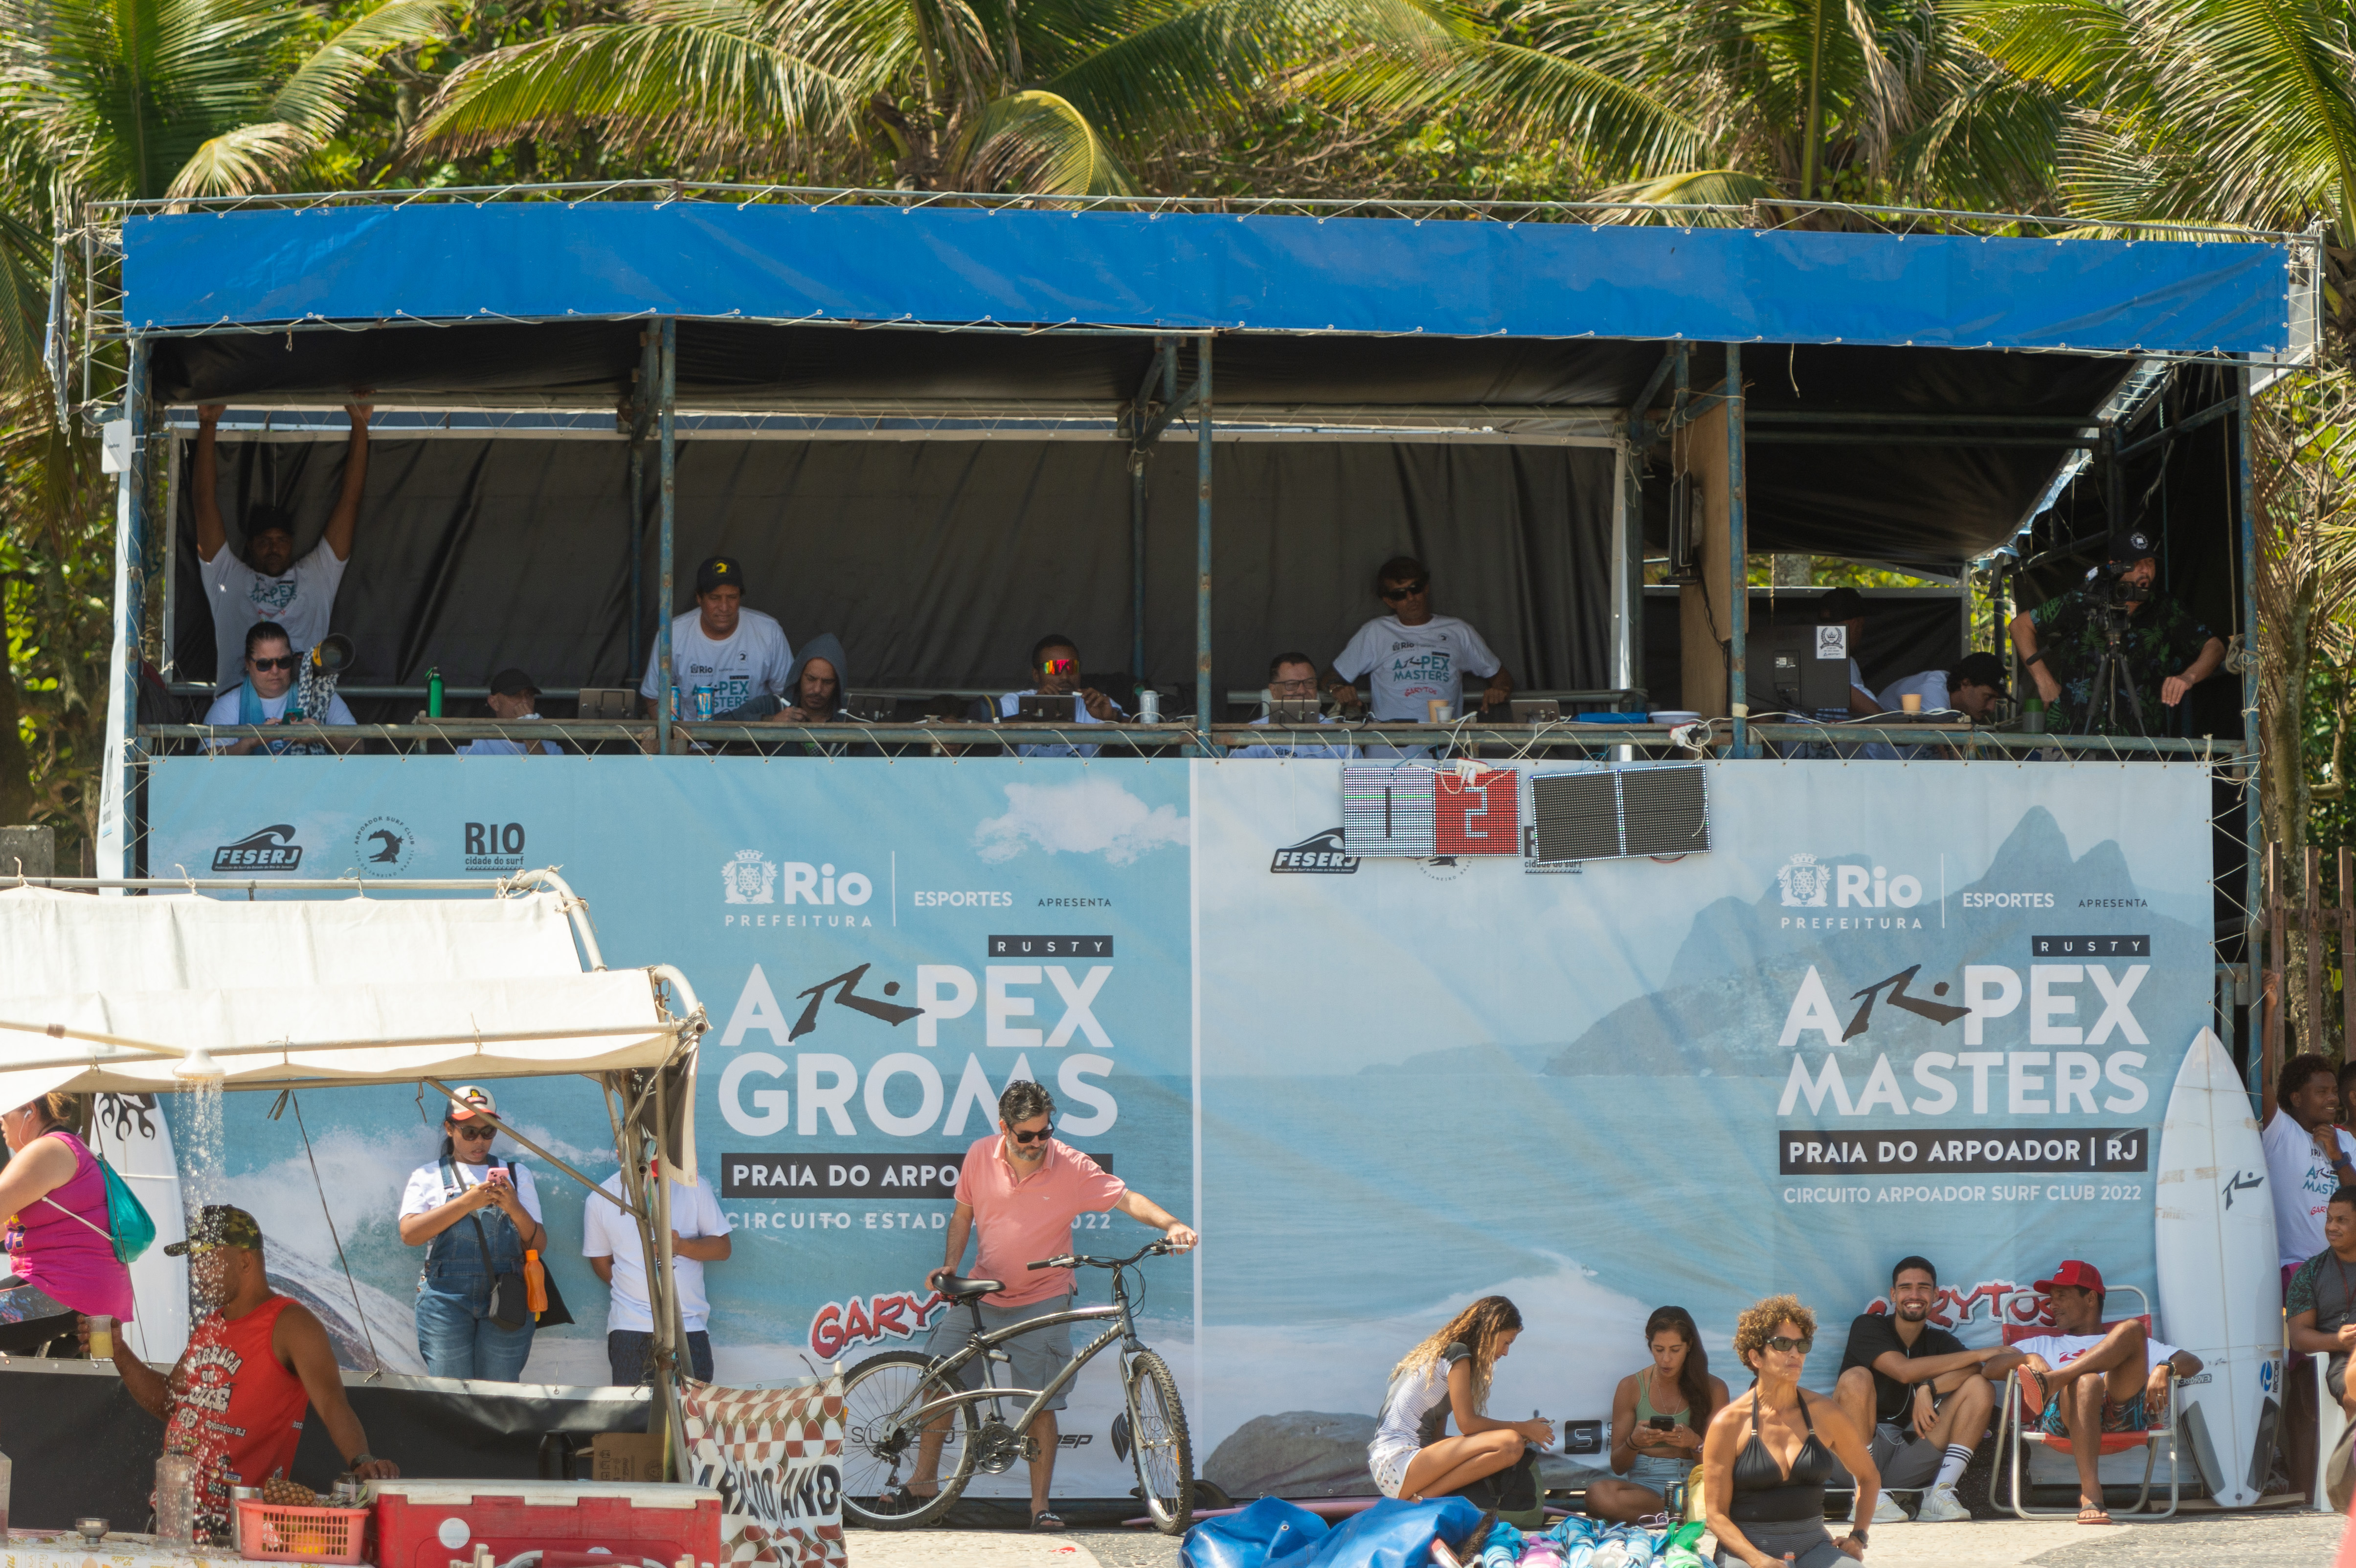 Rusty Arpex Masters inaugura o projeto Rio Cidade do Surf.